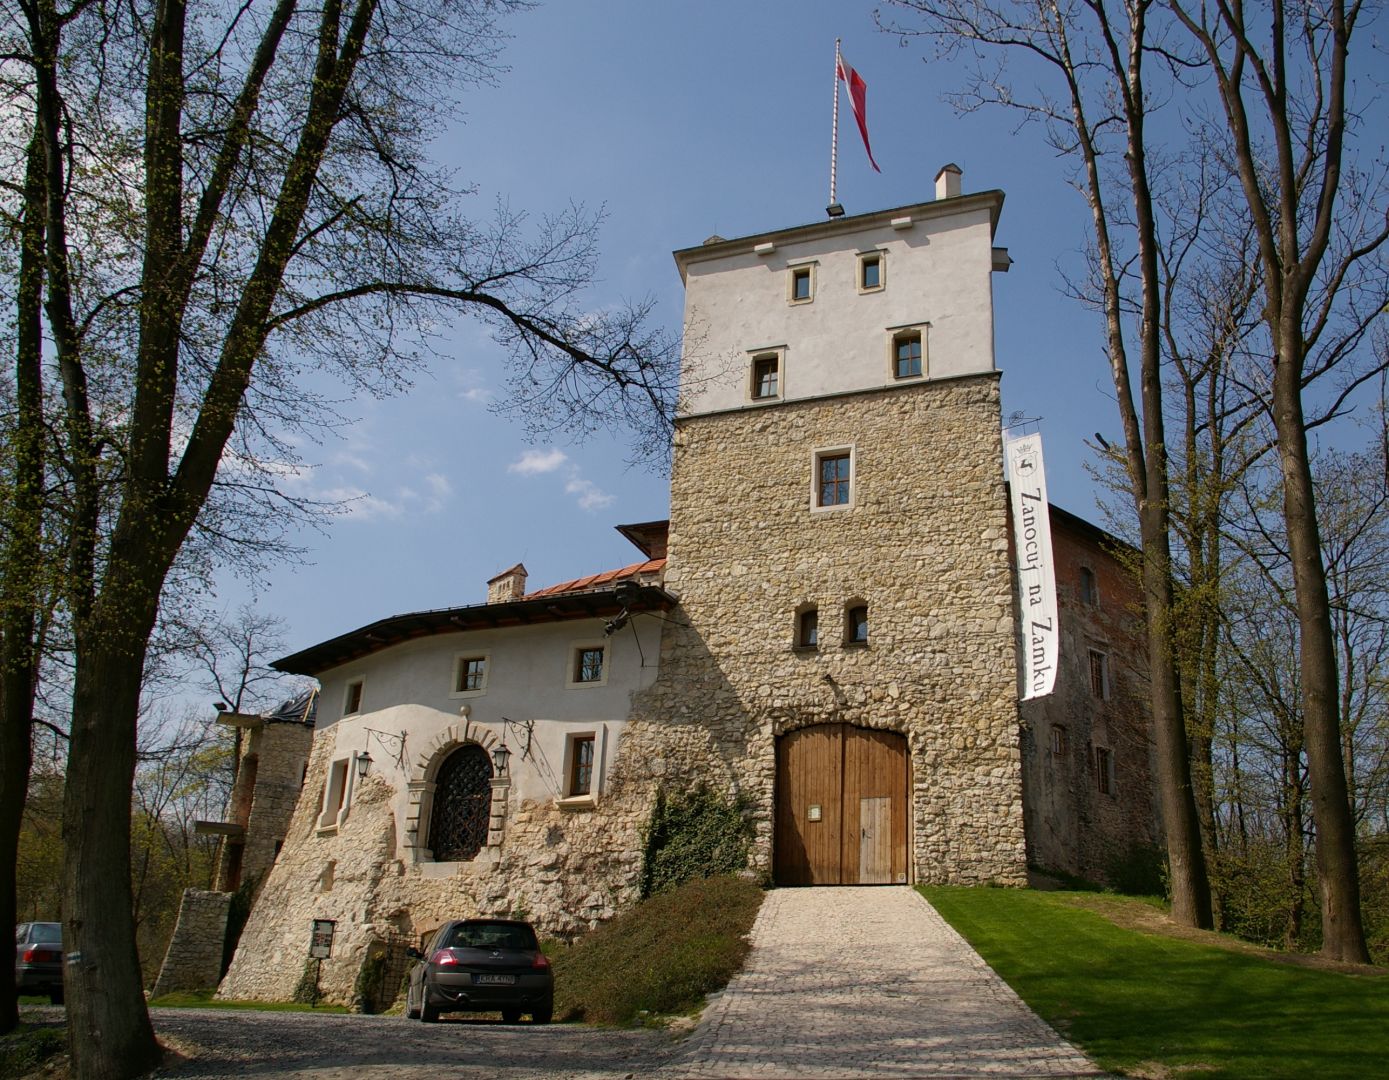 Knight's castle